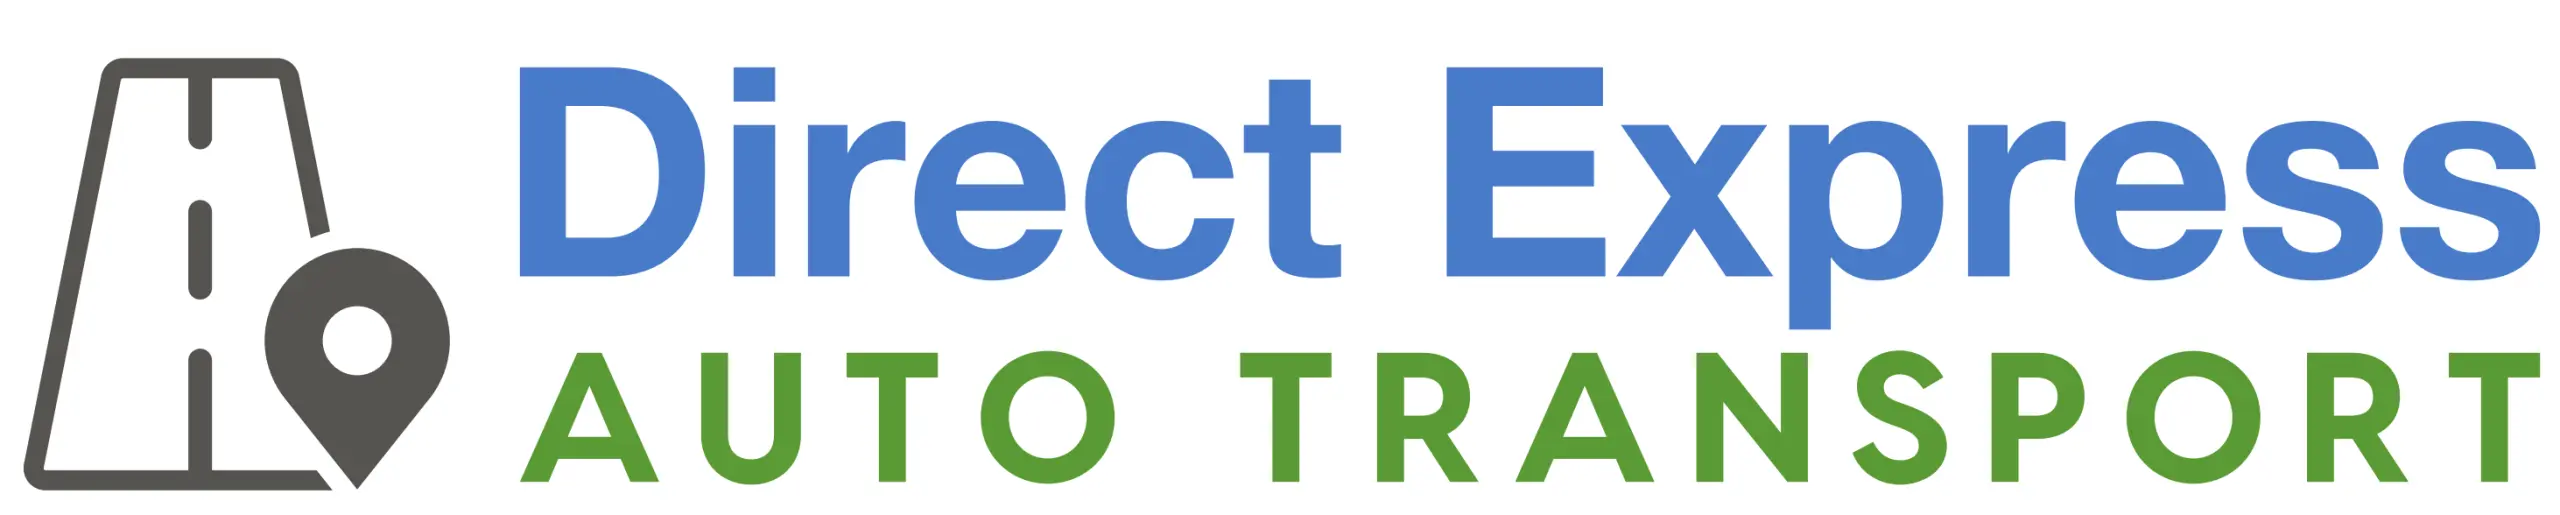 Direct Express Auto Transport Logo